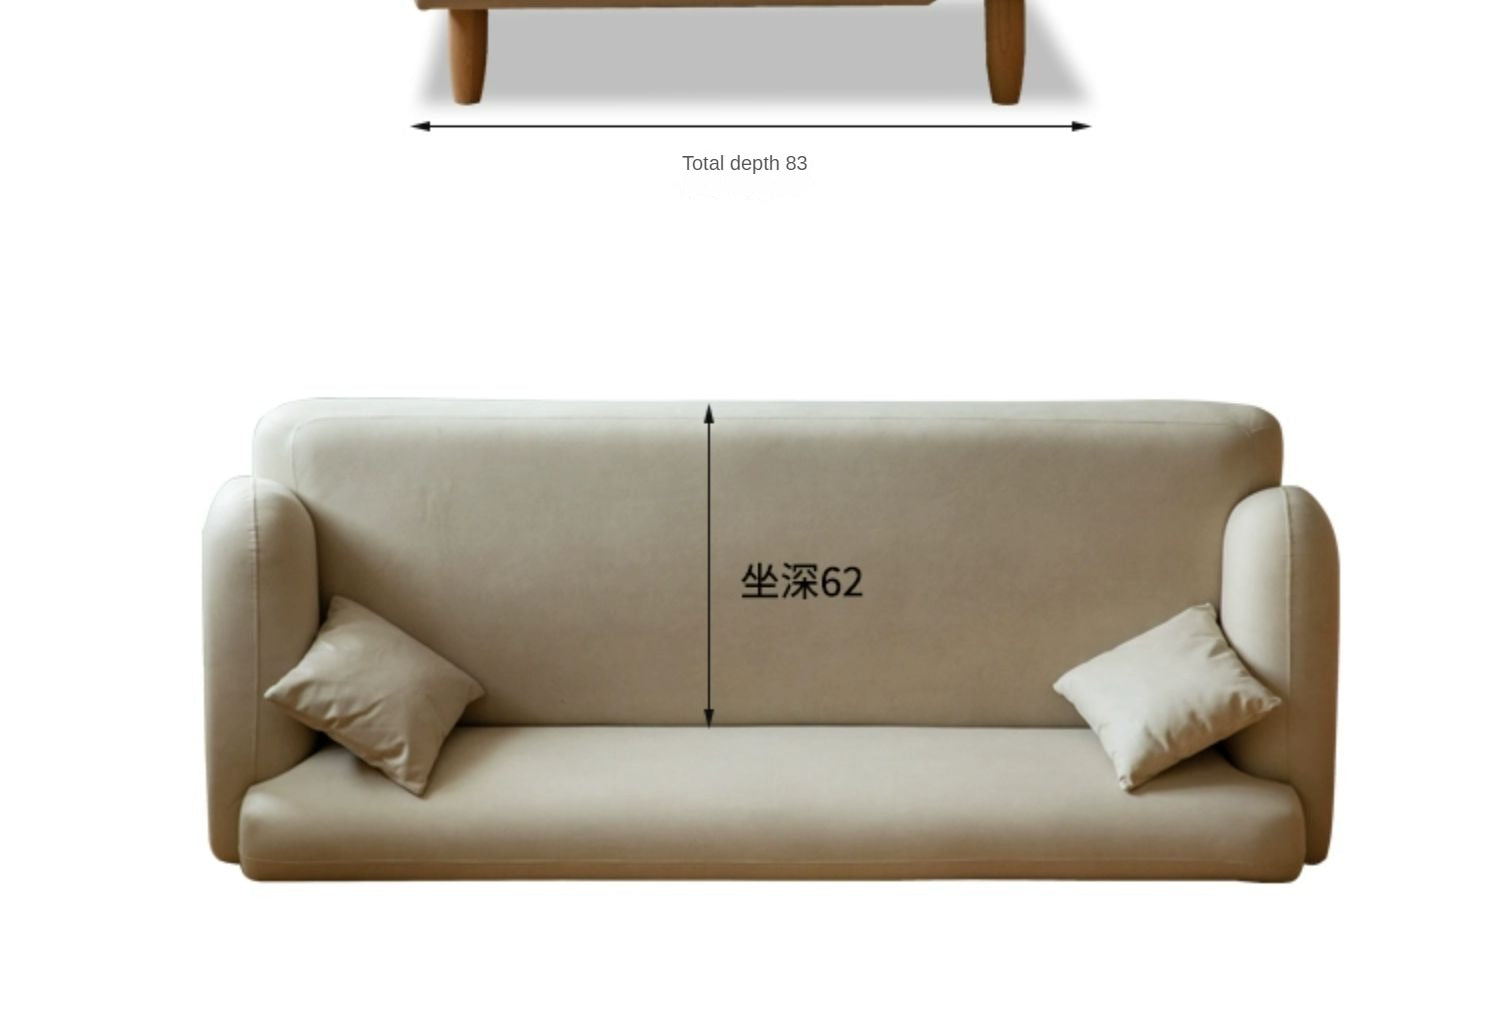 Сute Technology Fabric Sofa)